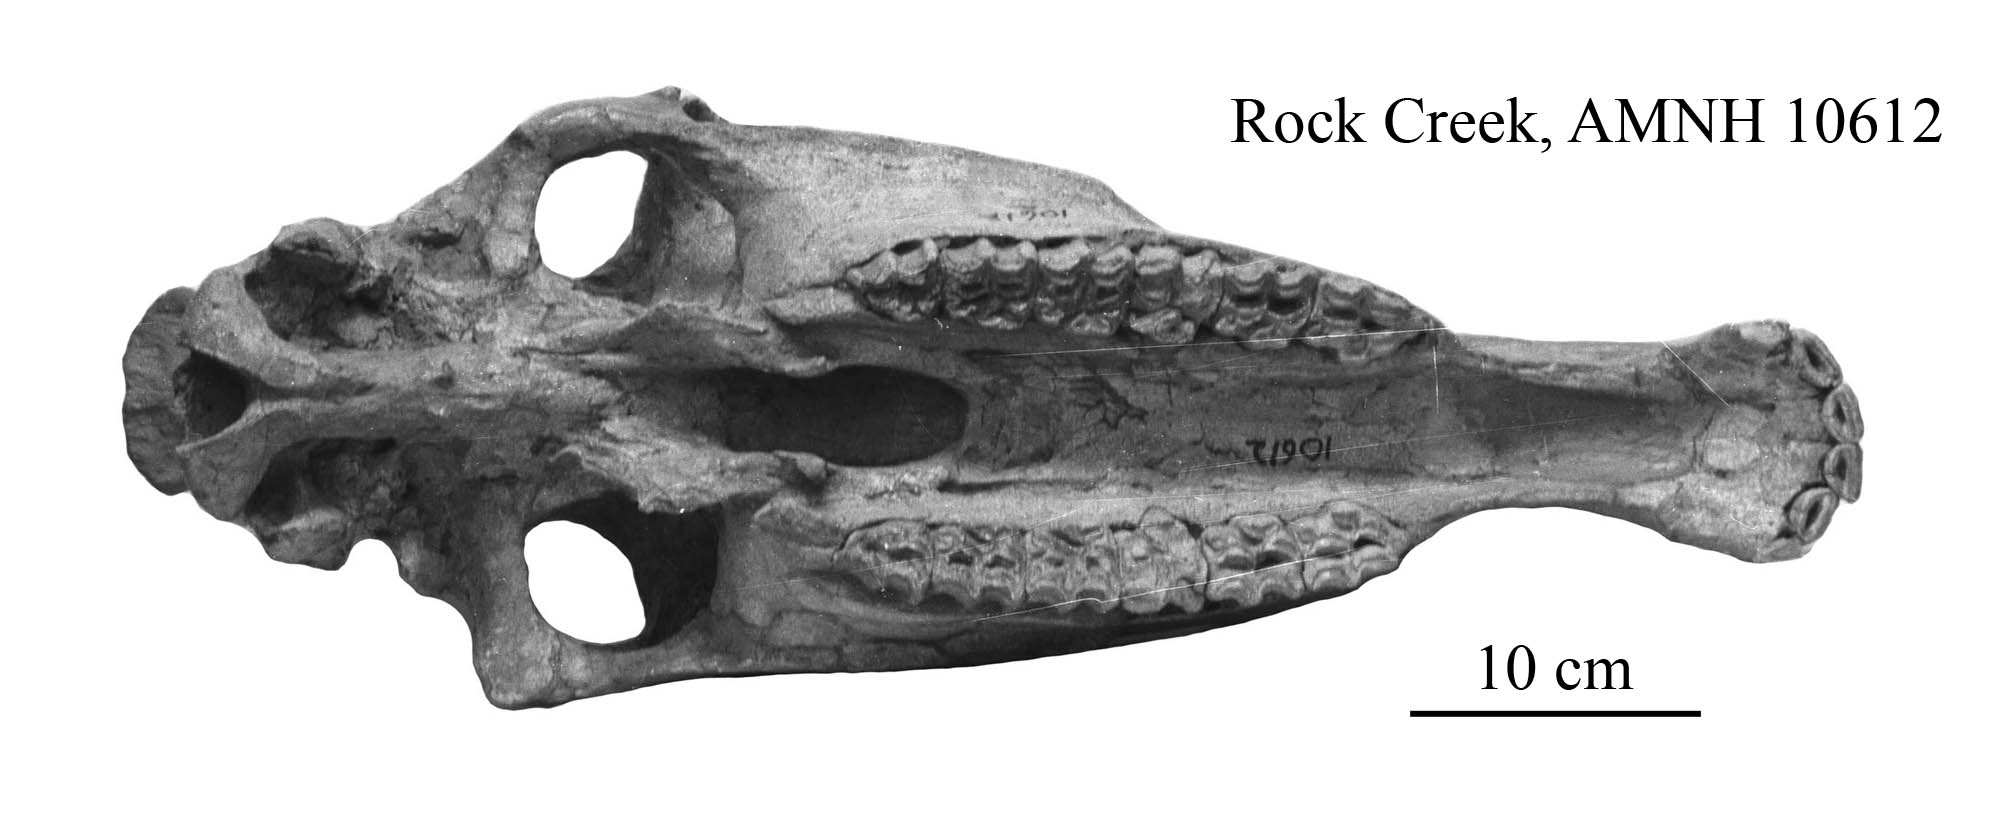 E. scotti AMNH 10612, occlusal